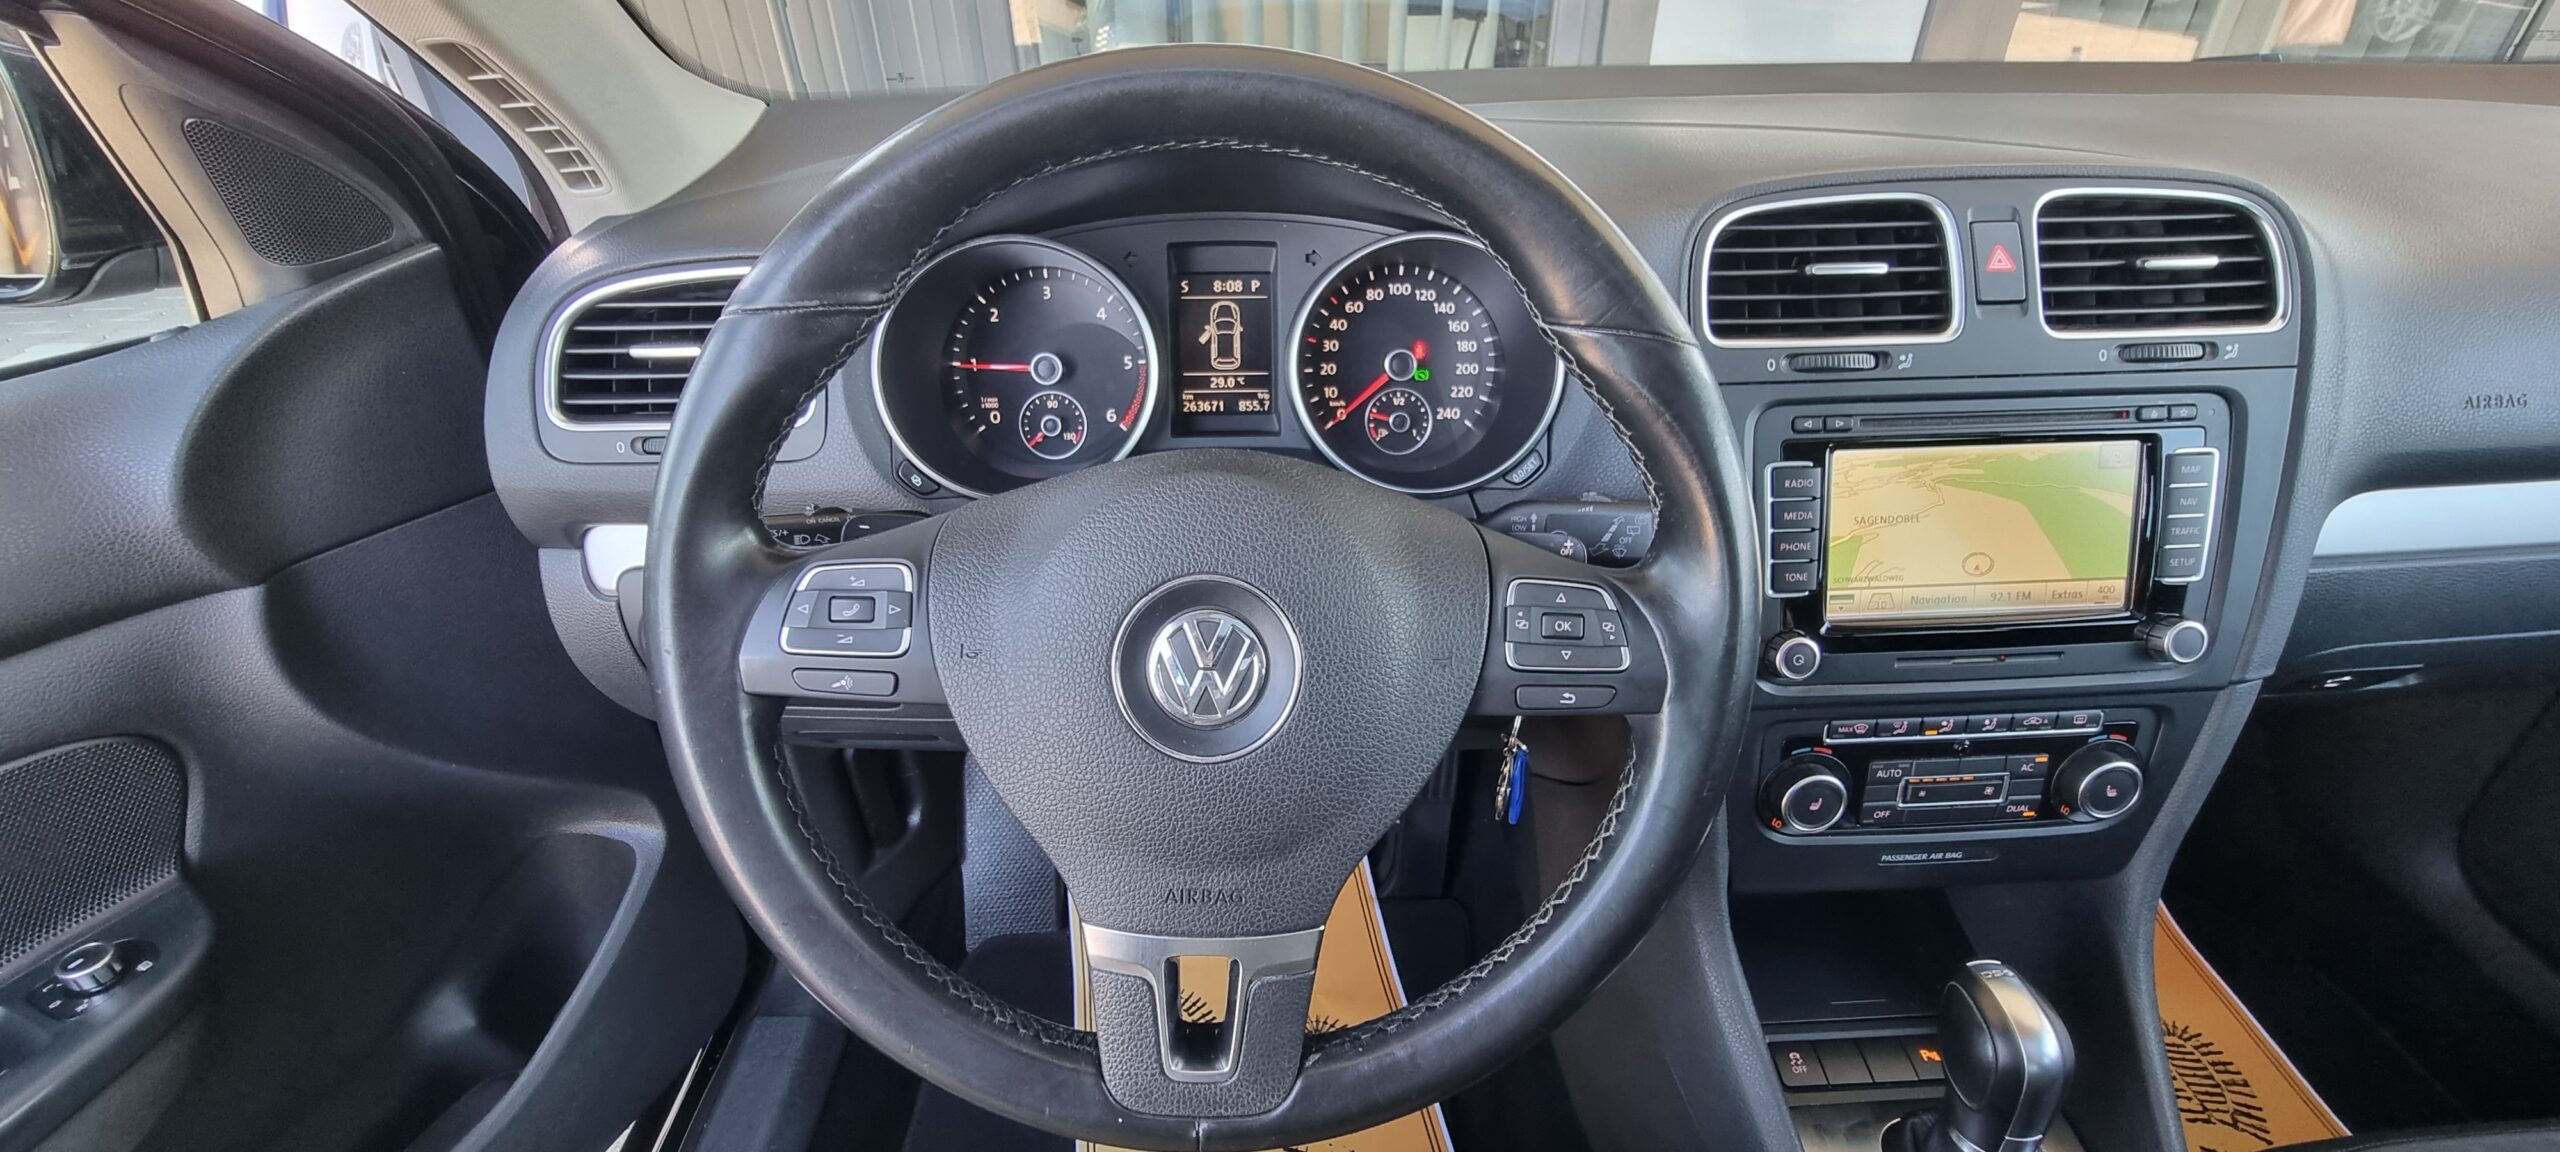 VW GOLF 6 AUTOMAT, 2.0 TDI, 140 CP, EURO 5, AN 2012